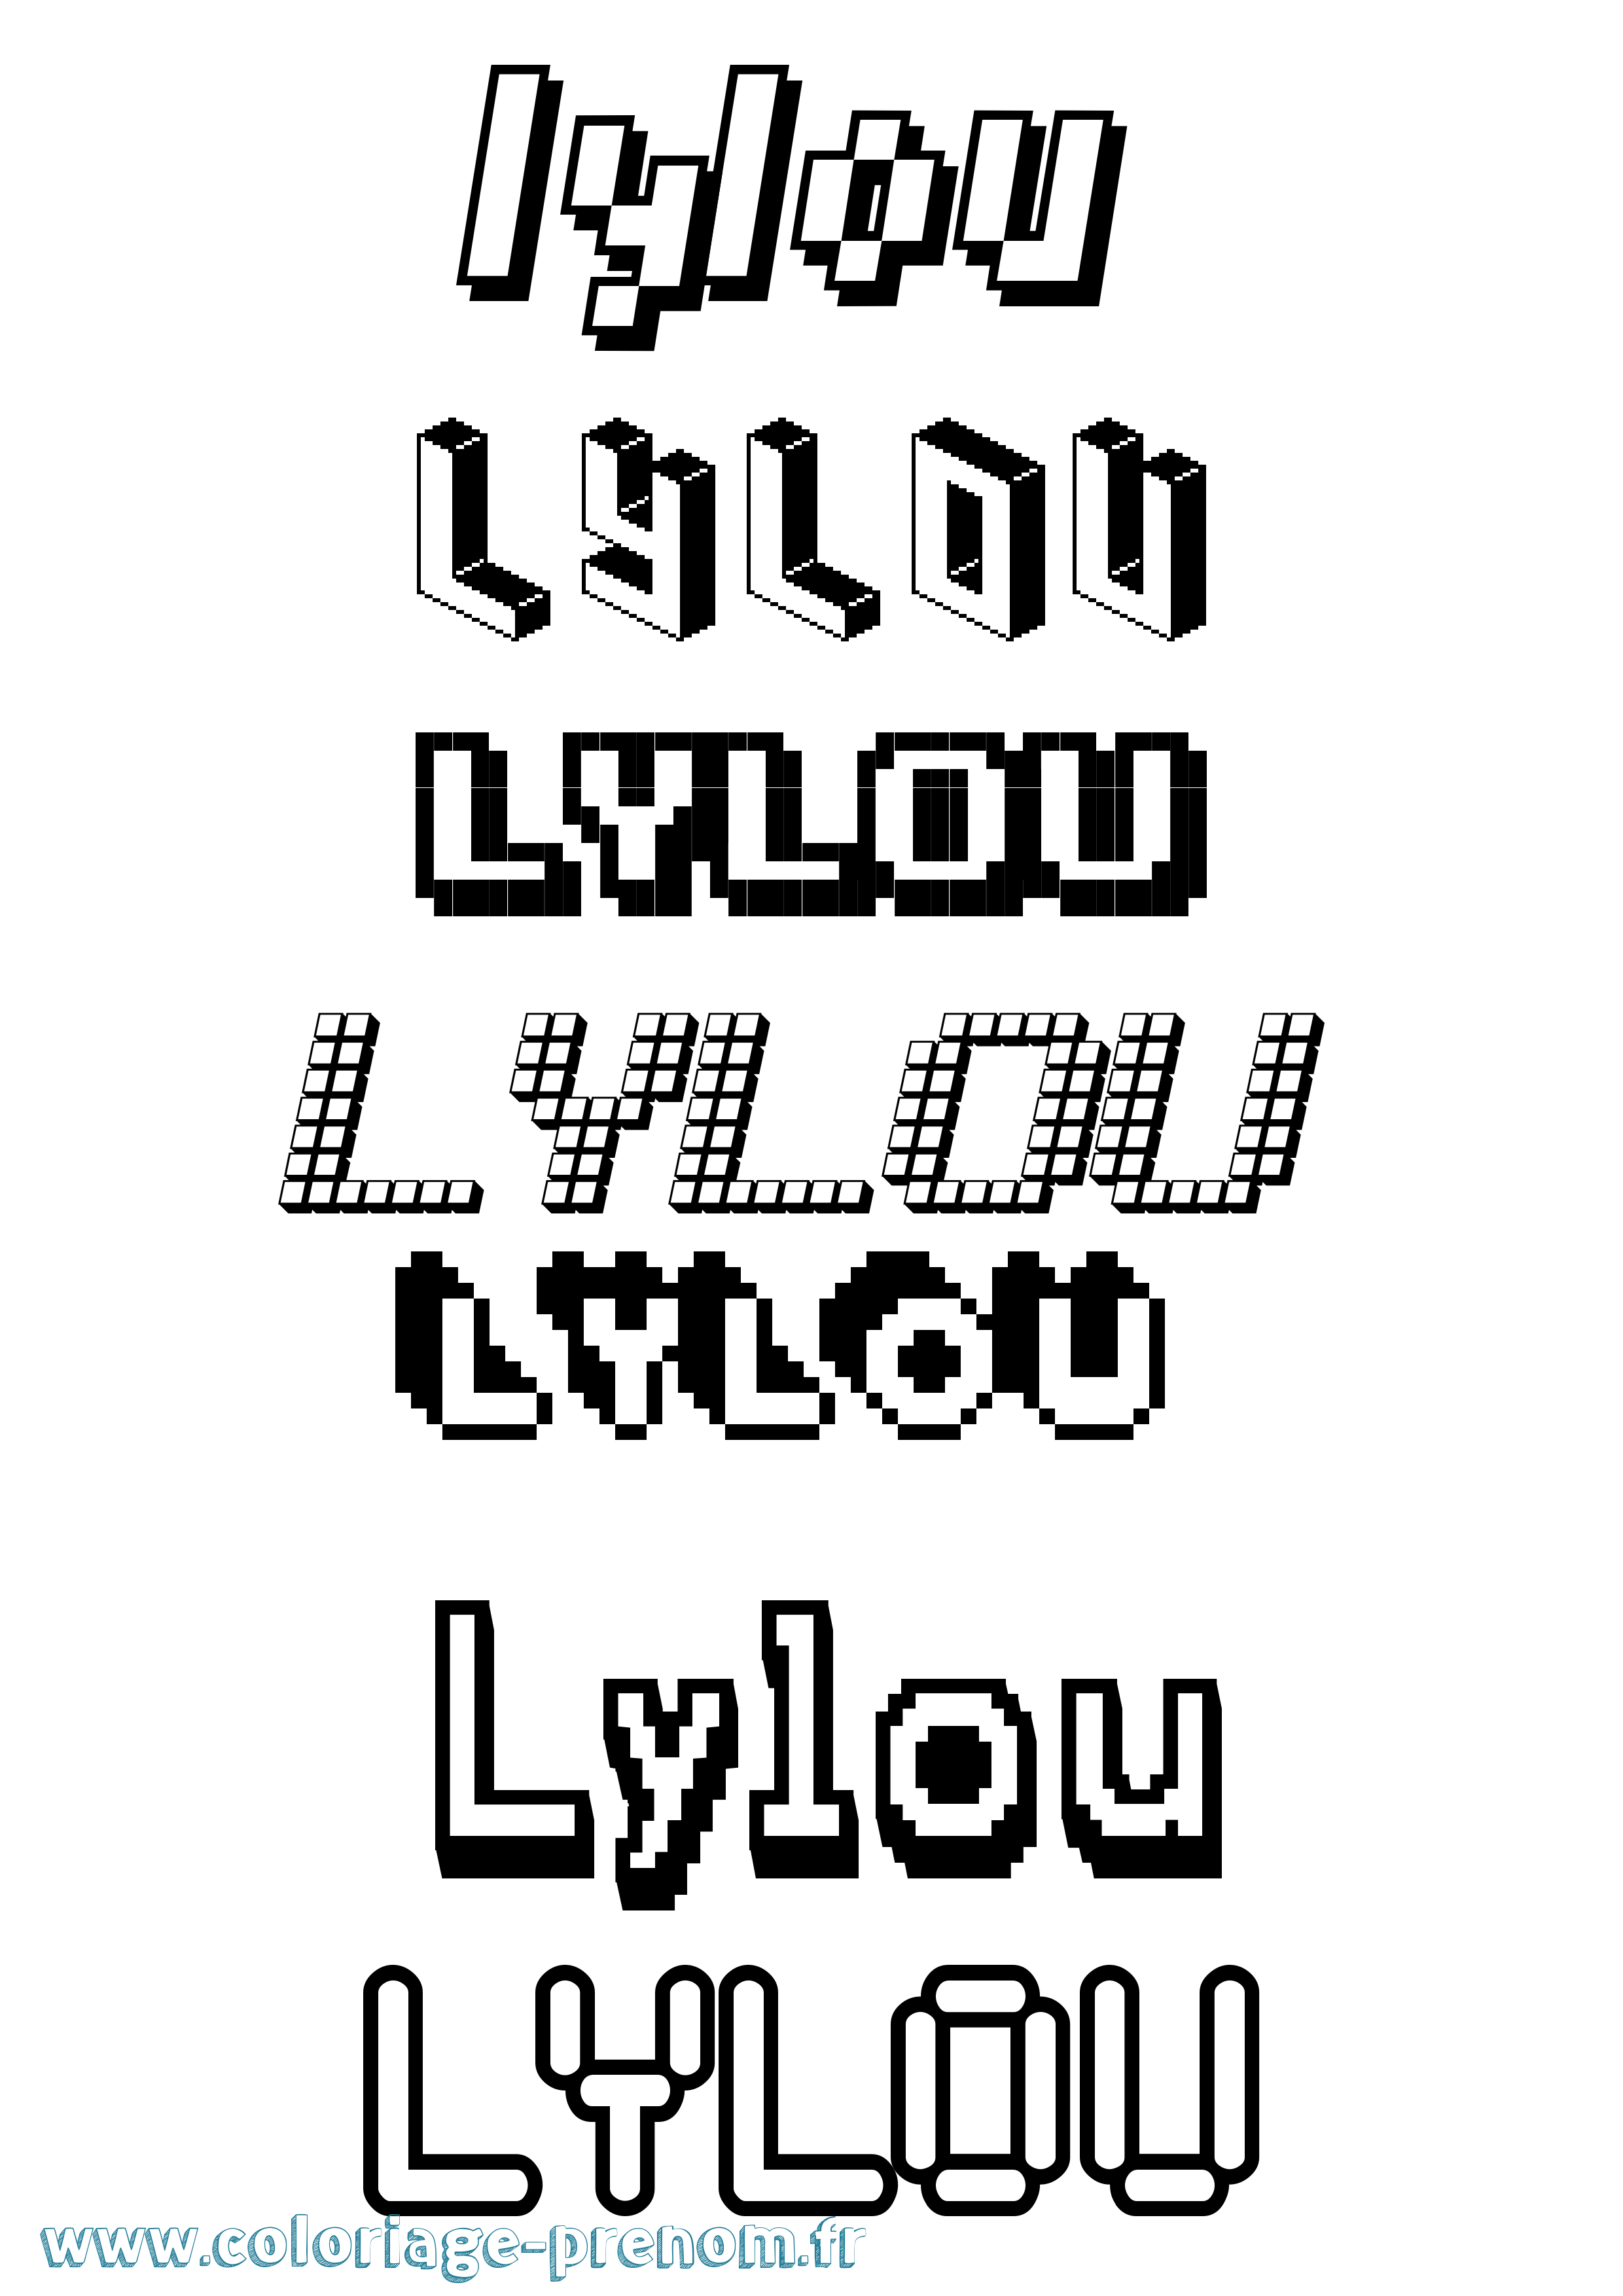 Coloriage prénom Lylou Pixel